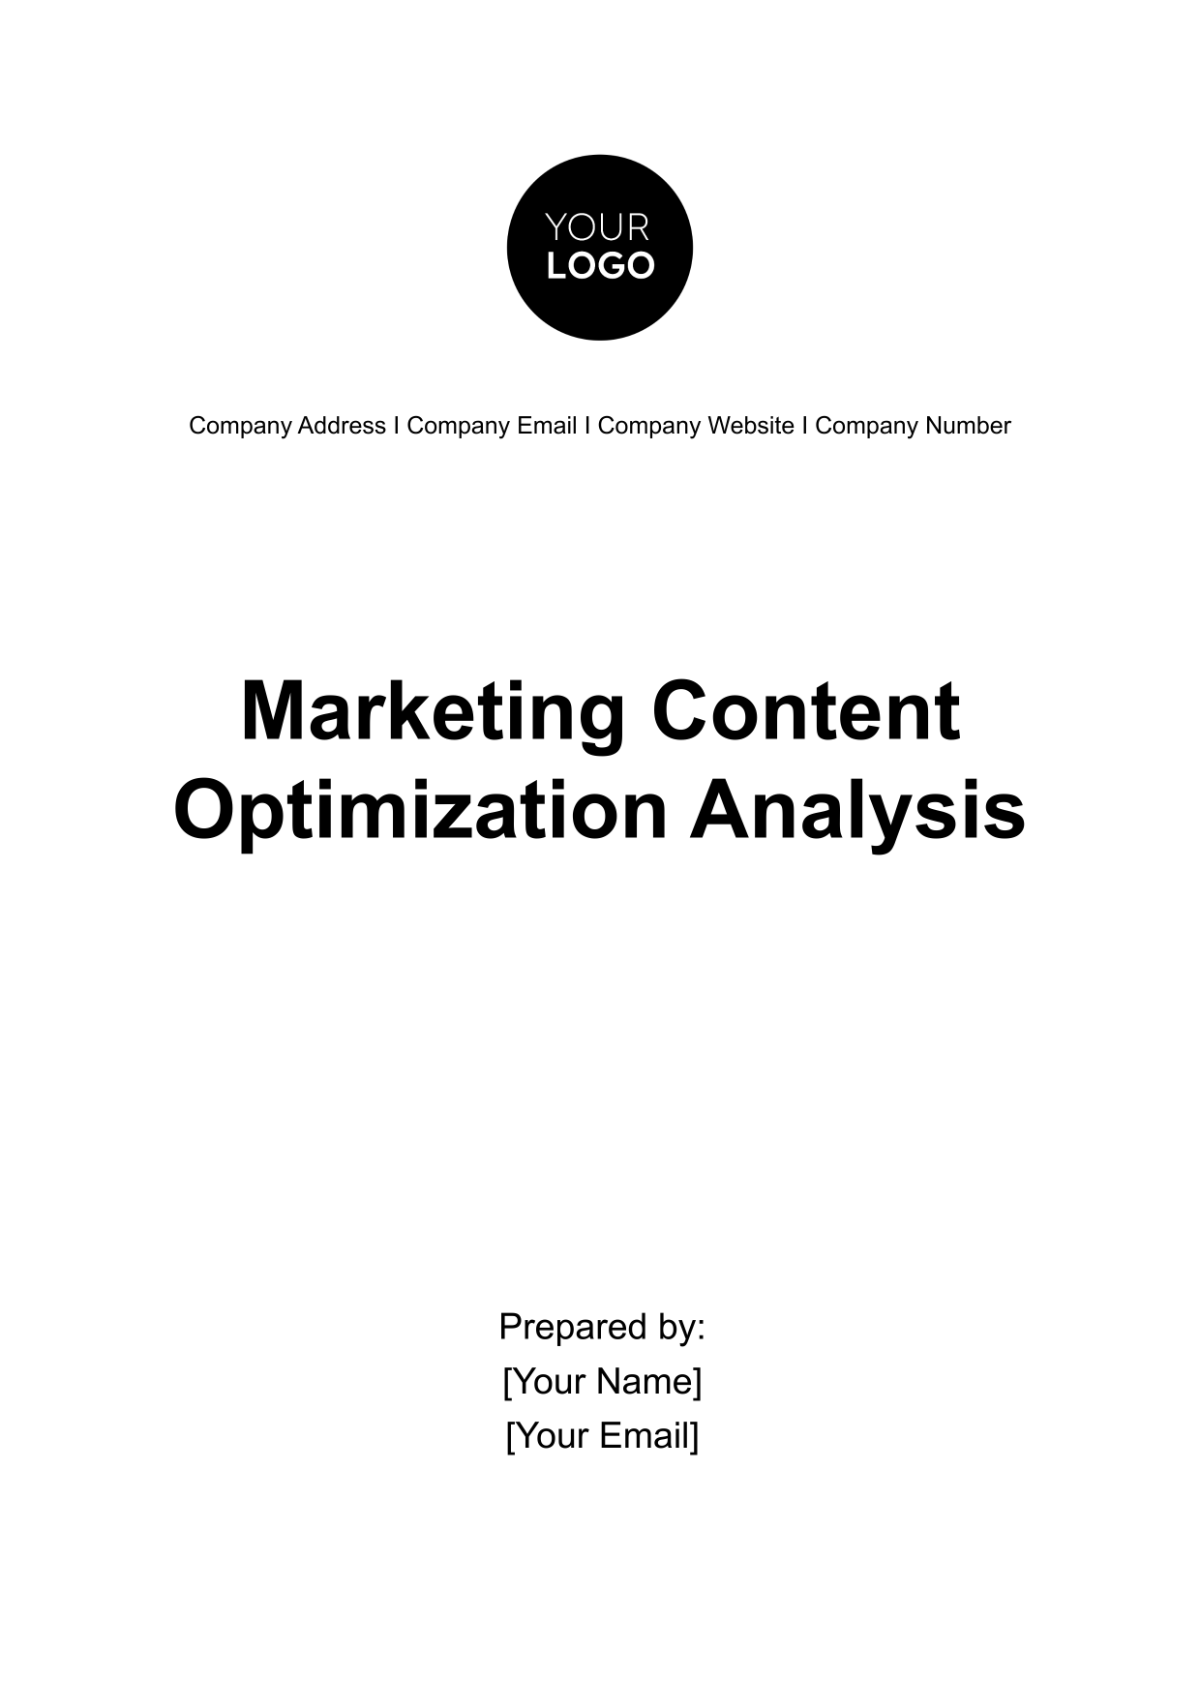 Marketing Content Optimization Analysis Template